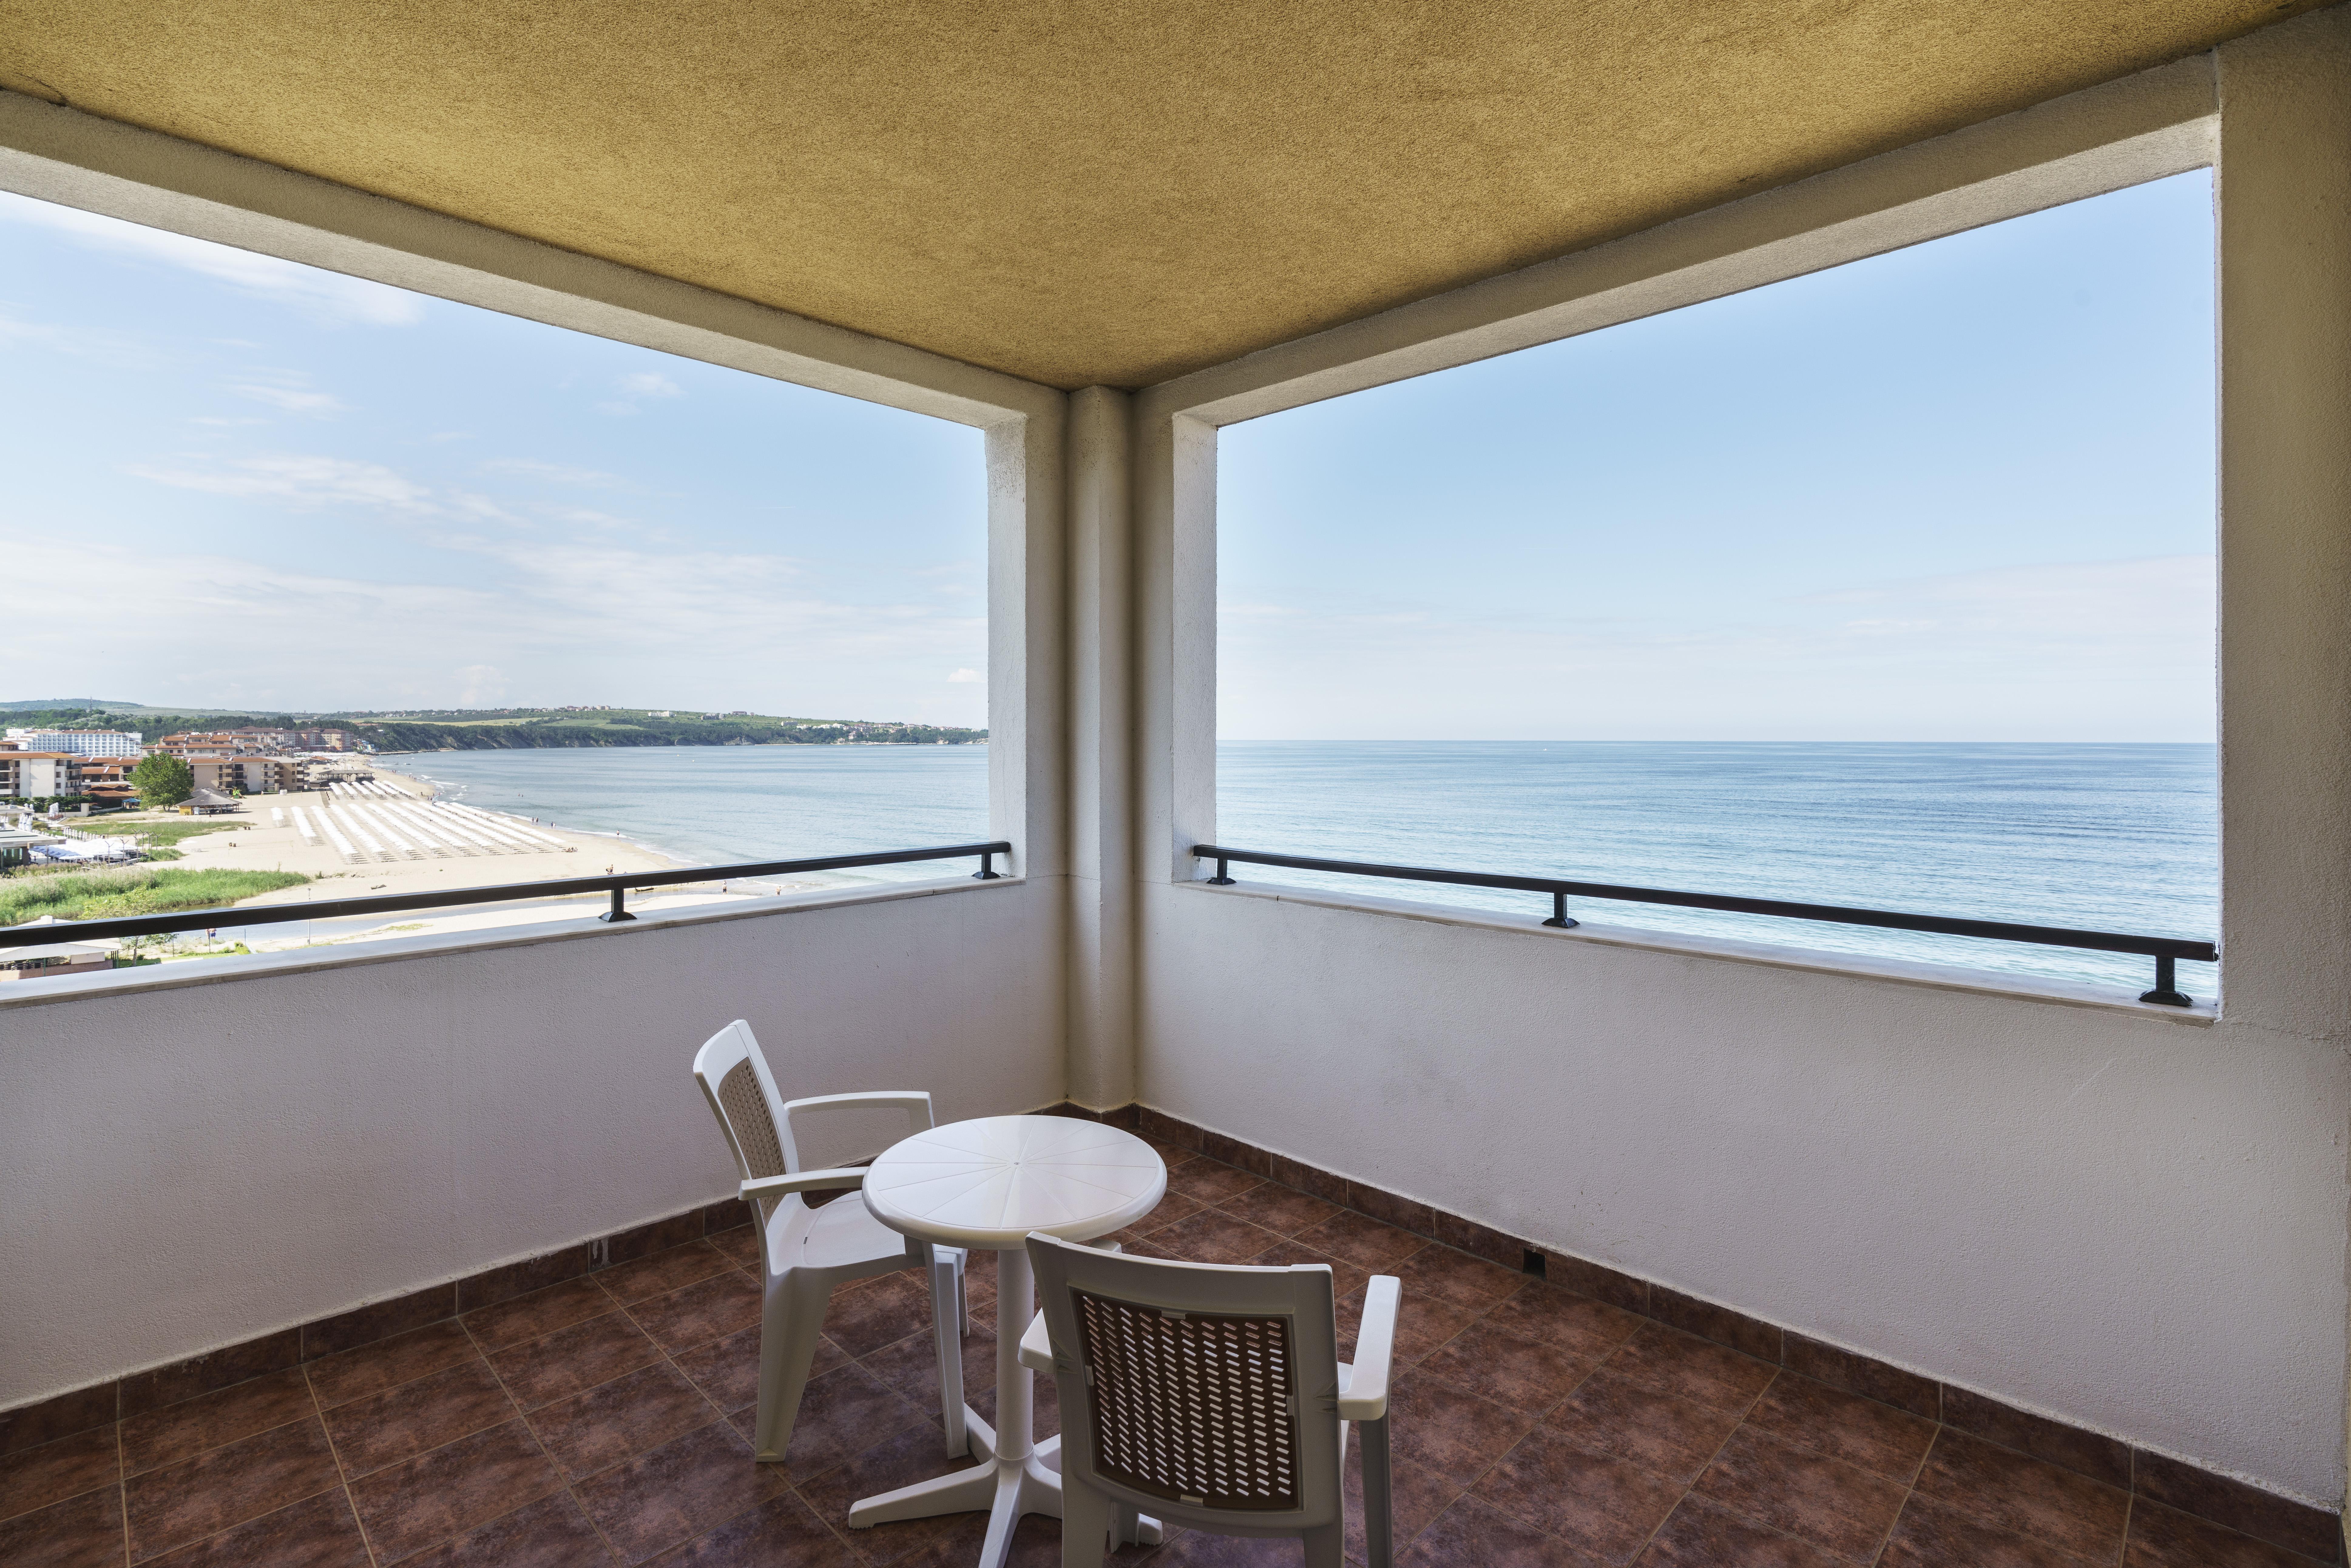 Alua Helios Bay Hotel Obzor Exterior photo